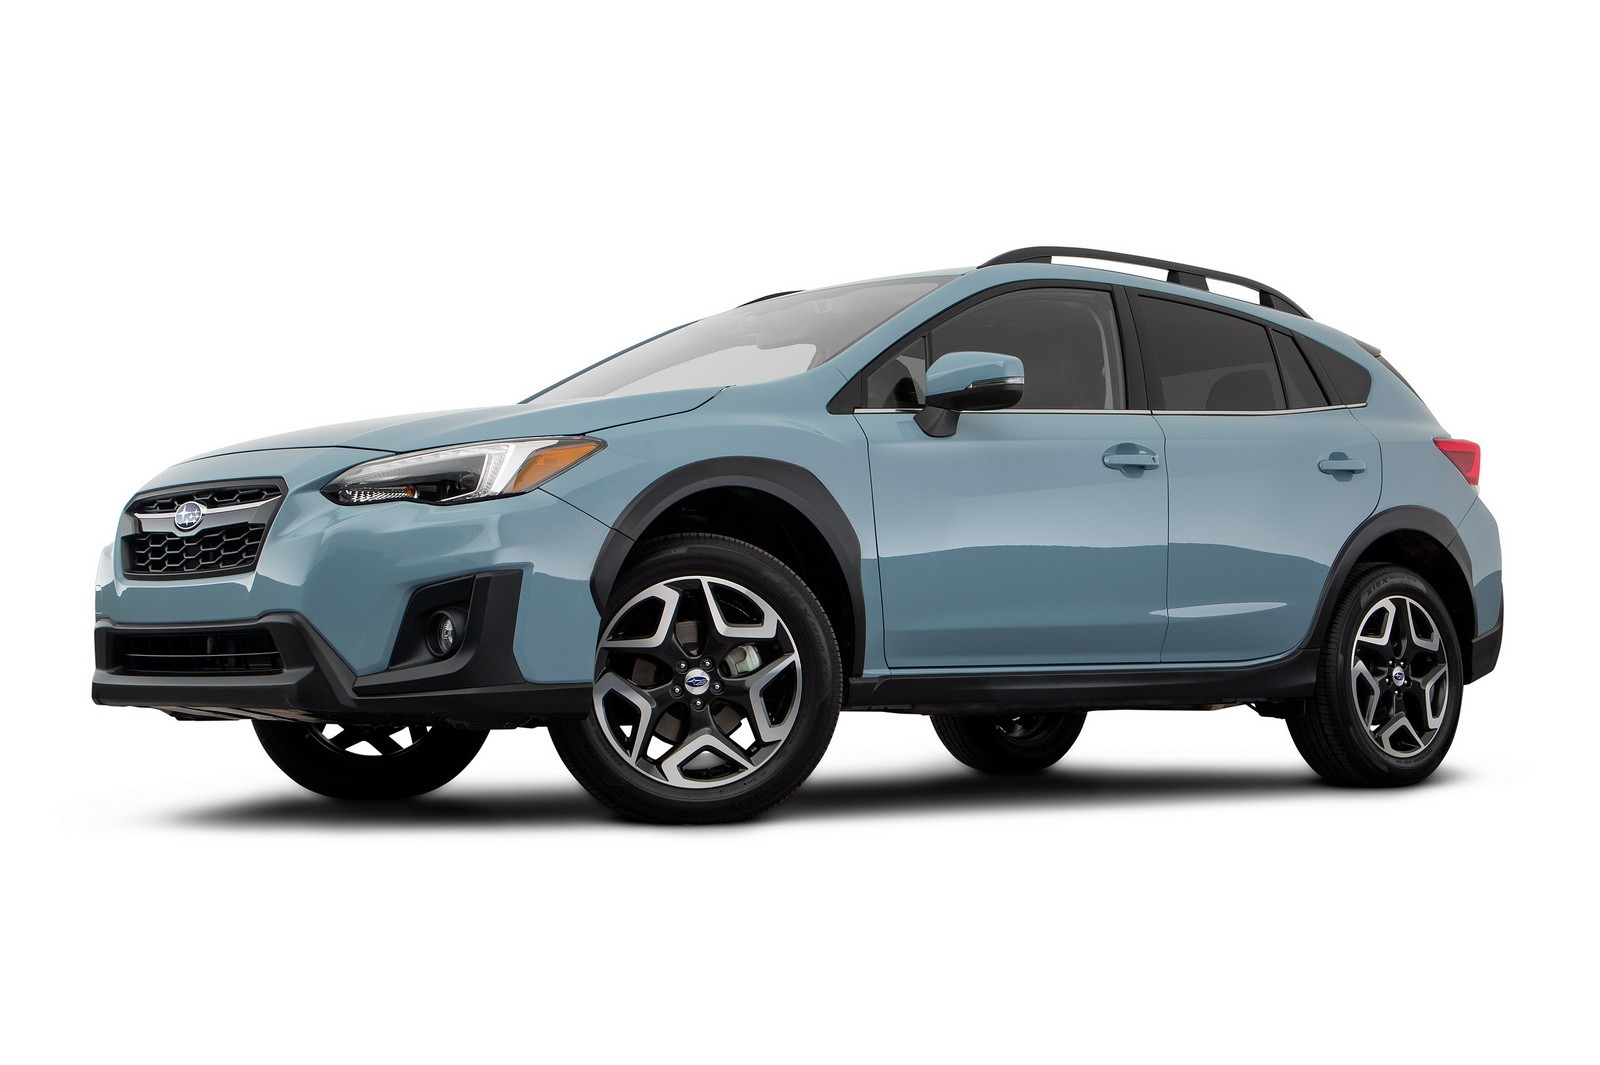 2019 Subaru Crosstrek Hybrid Confirmed With Toyota's Plug-In Hybrid  Technology - autoevolution